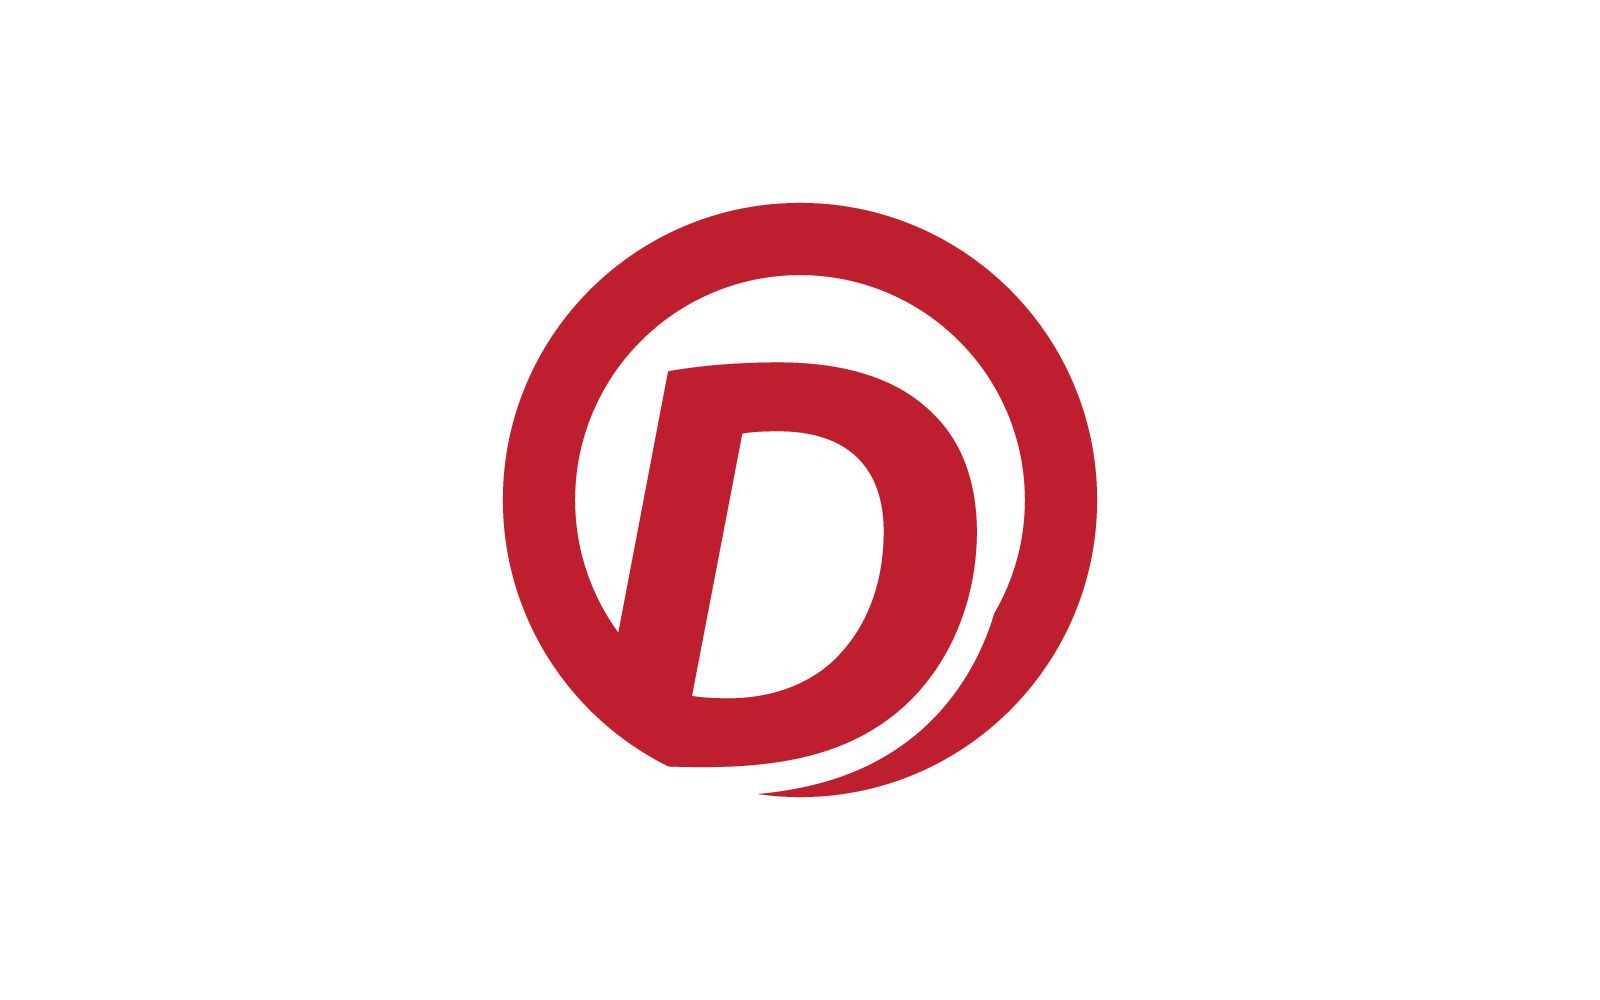 Modern D Initial letter alphabet font logo vector design